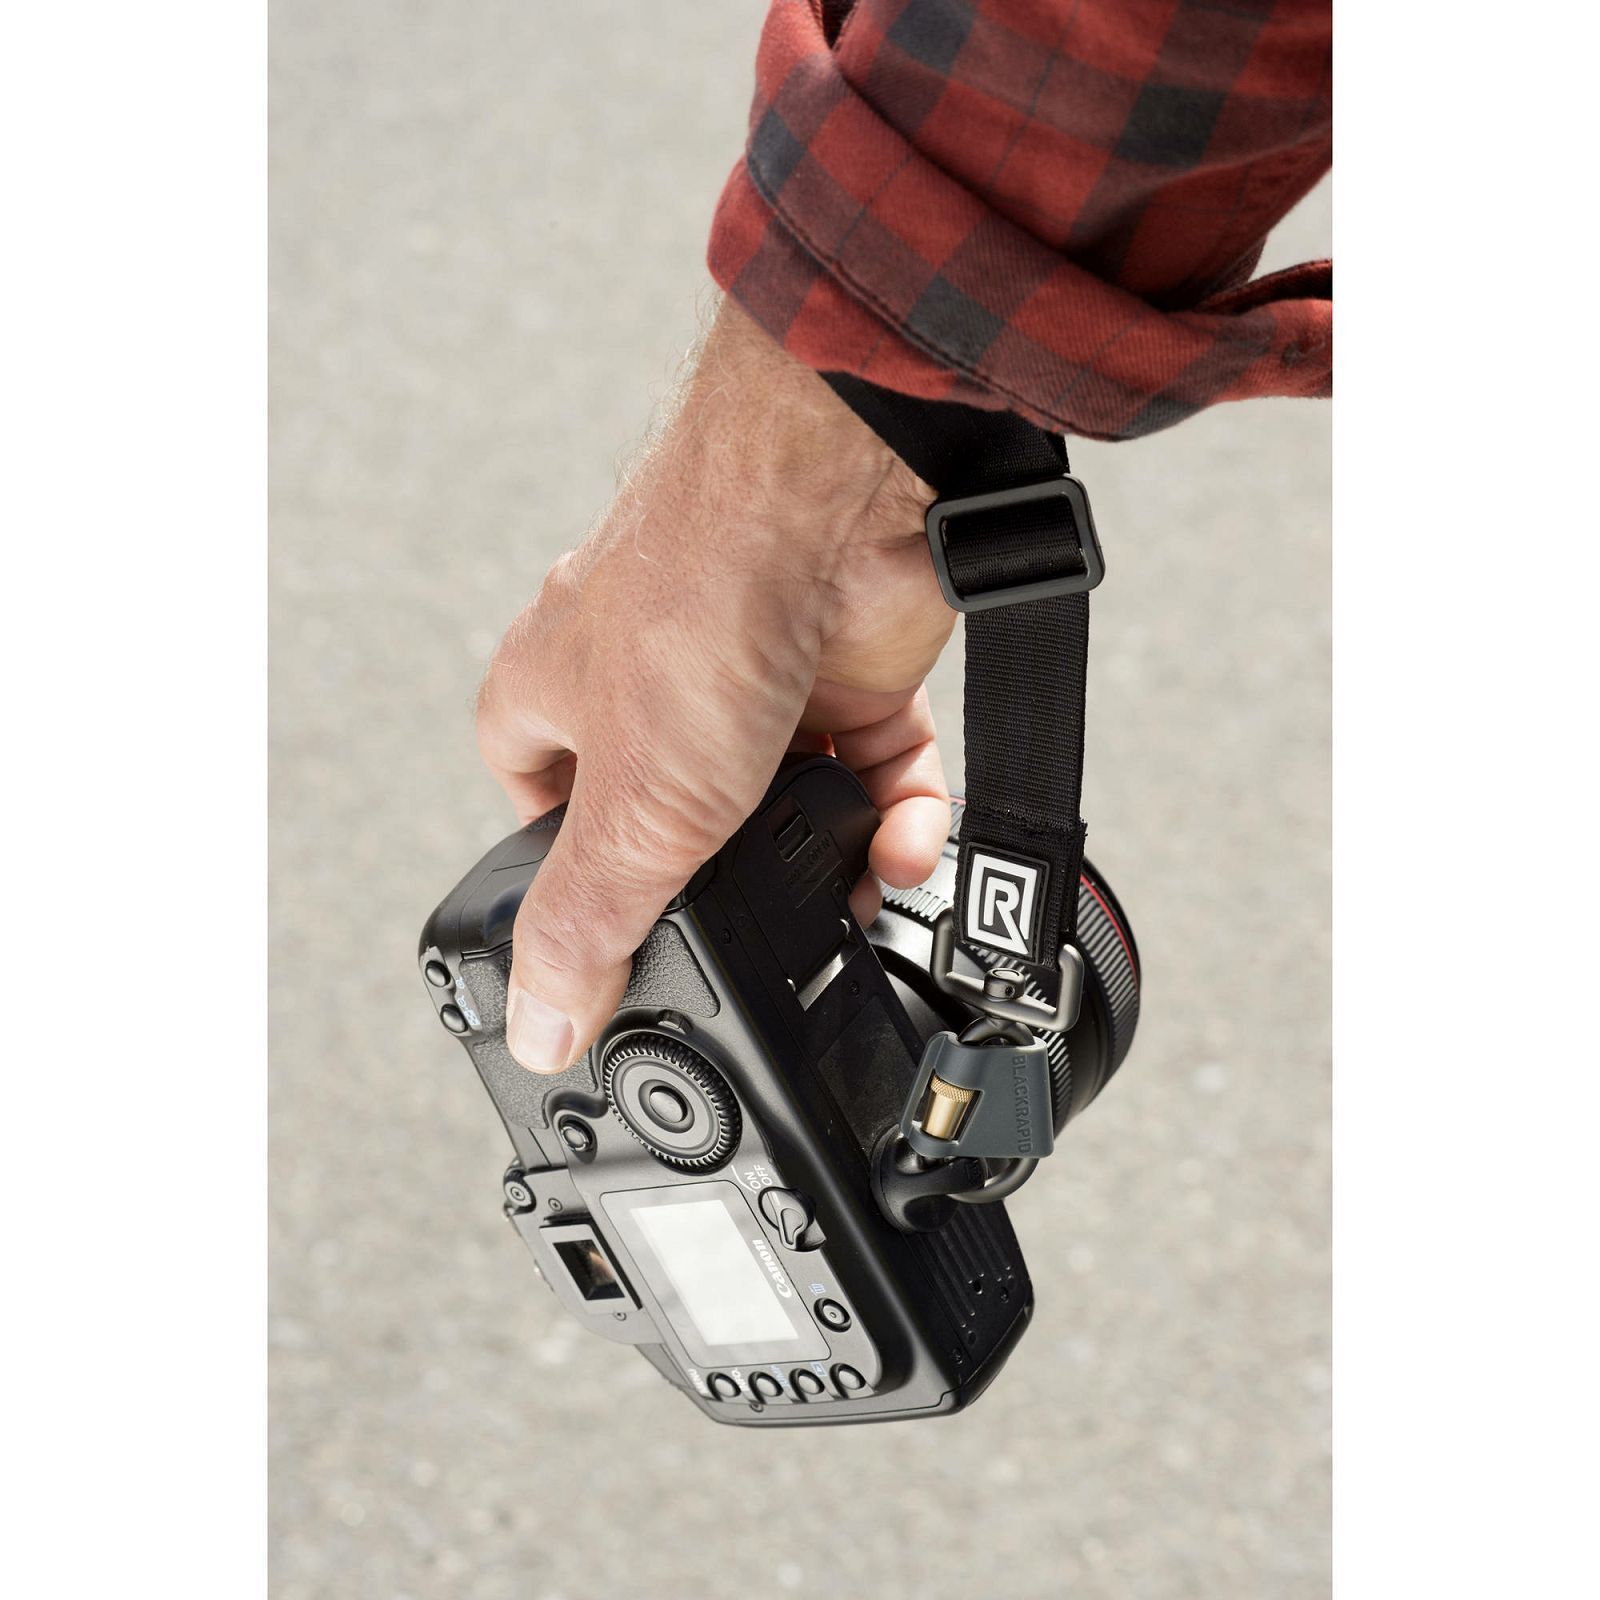 BlackRapid Wrist strap w/FR-5 Breathe Camera Grip Strap zahvatnjak ručni držač za fotoaparat (362010)